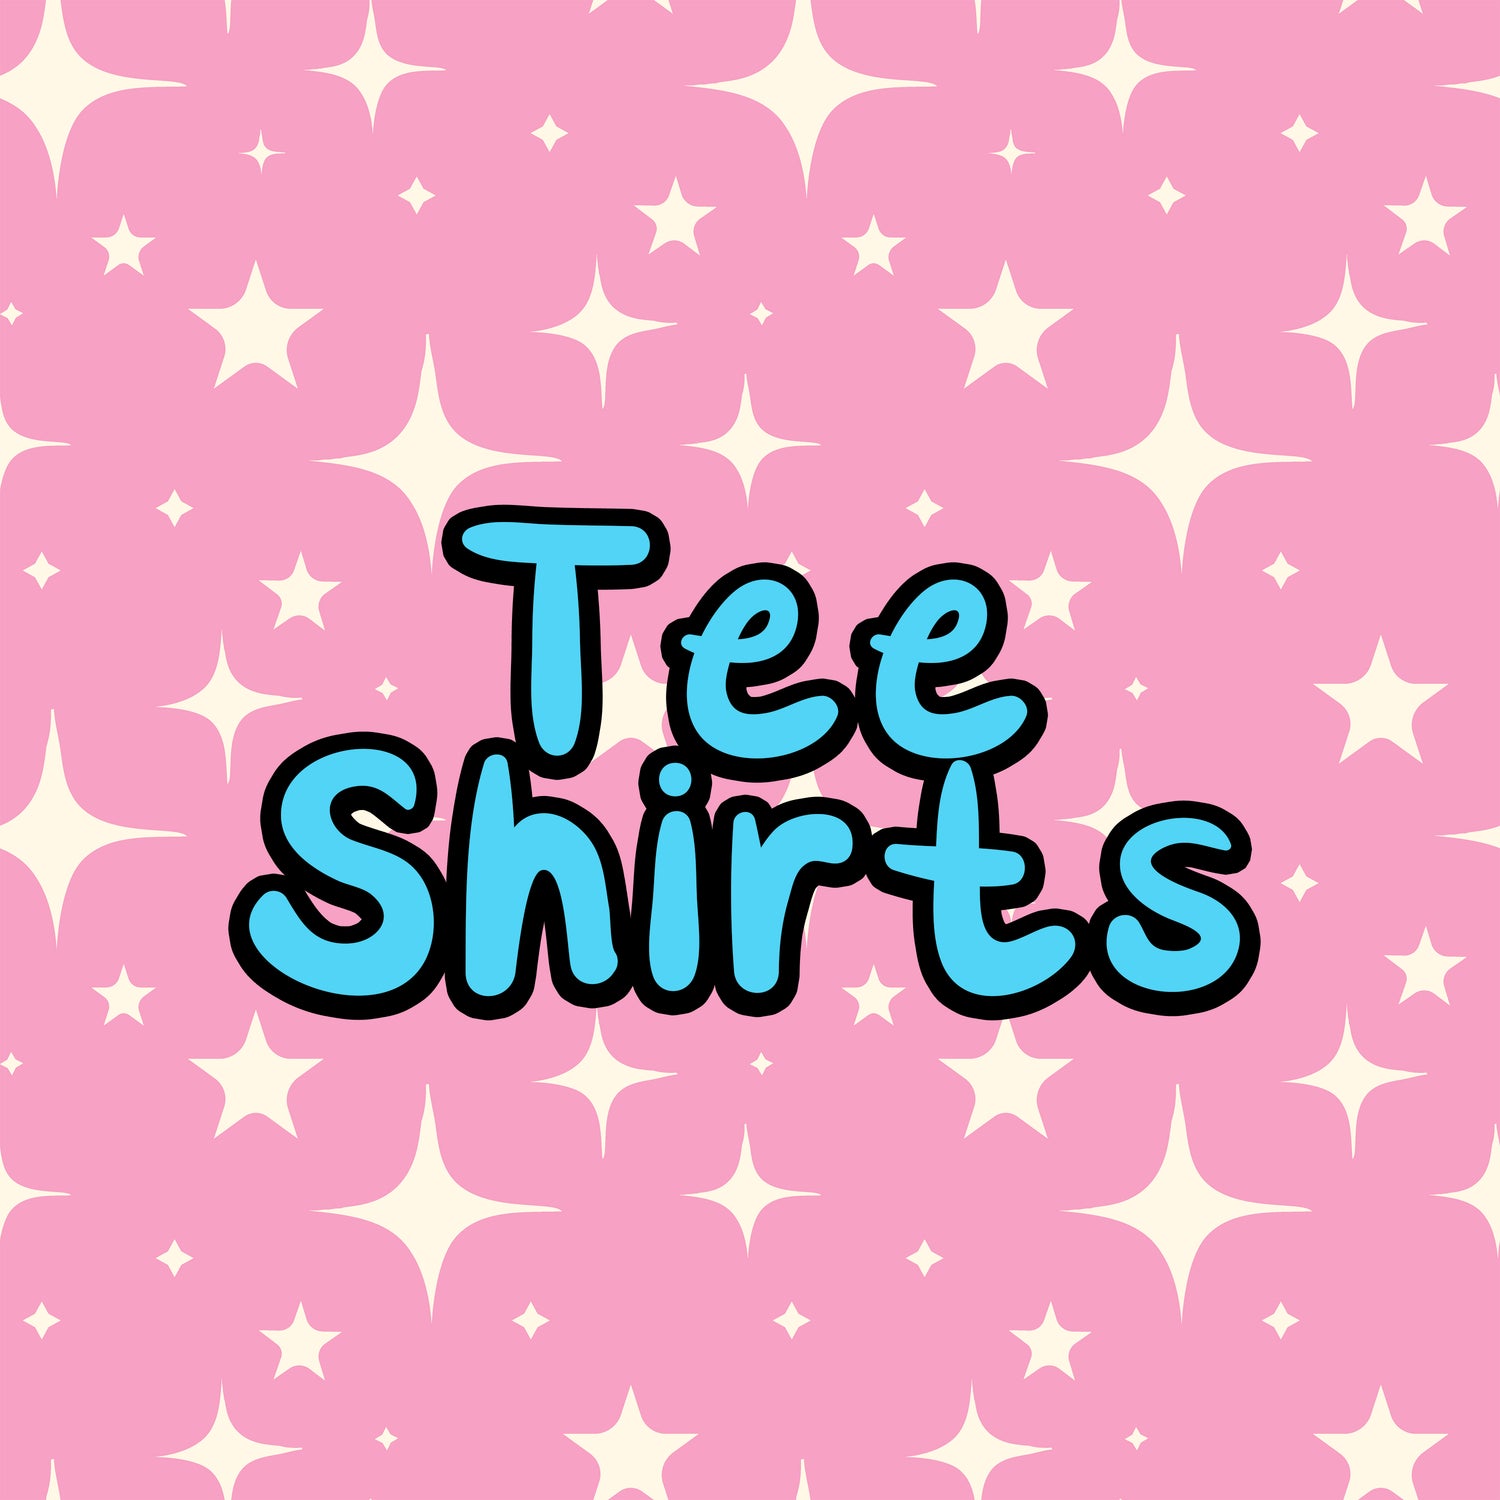 Tee shirts